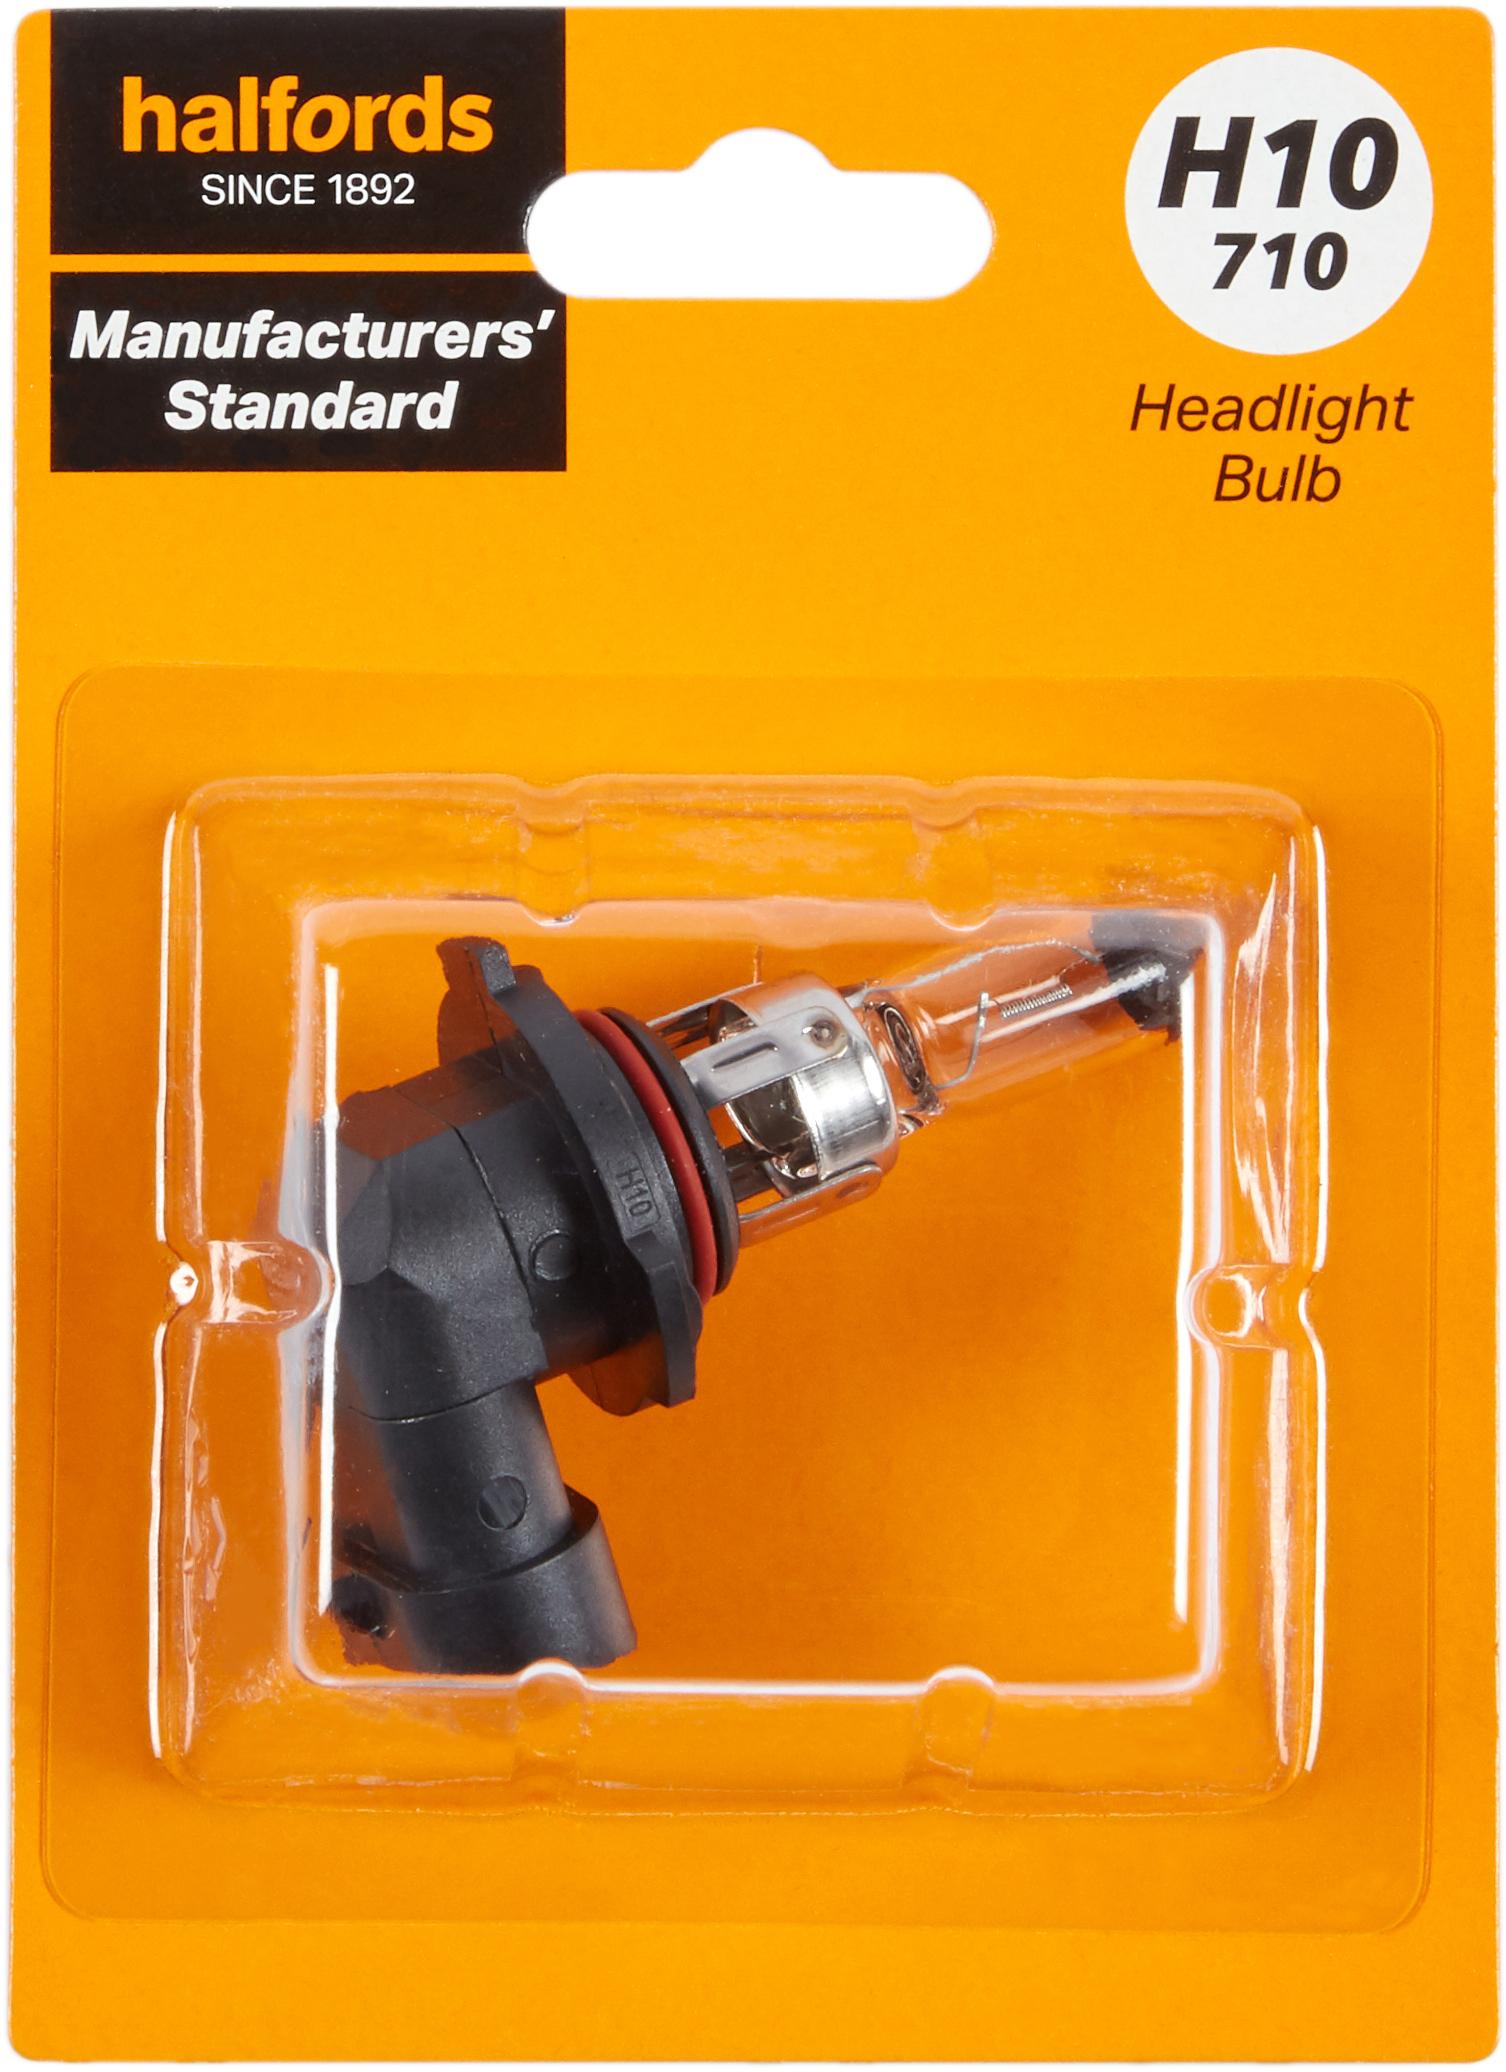 H10 710 Car Headlight Bulb Manufacturers Standard Halfords Single Pack